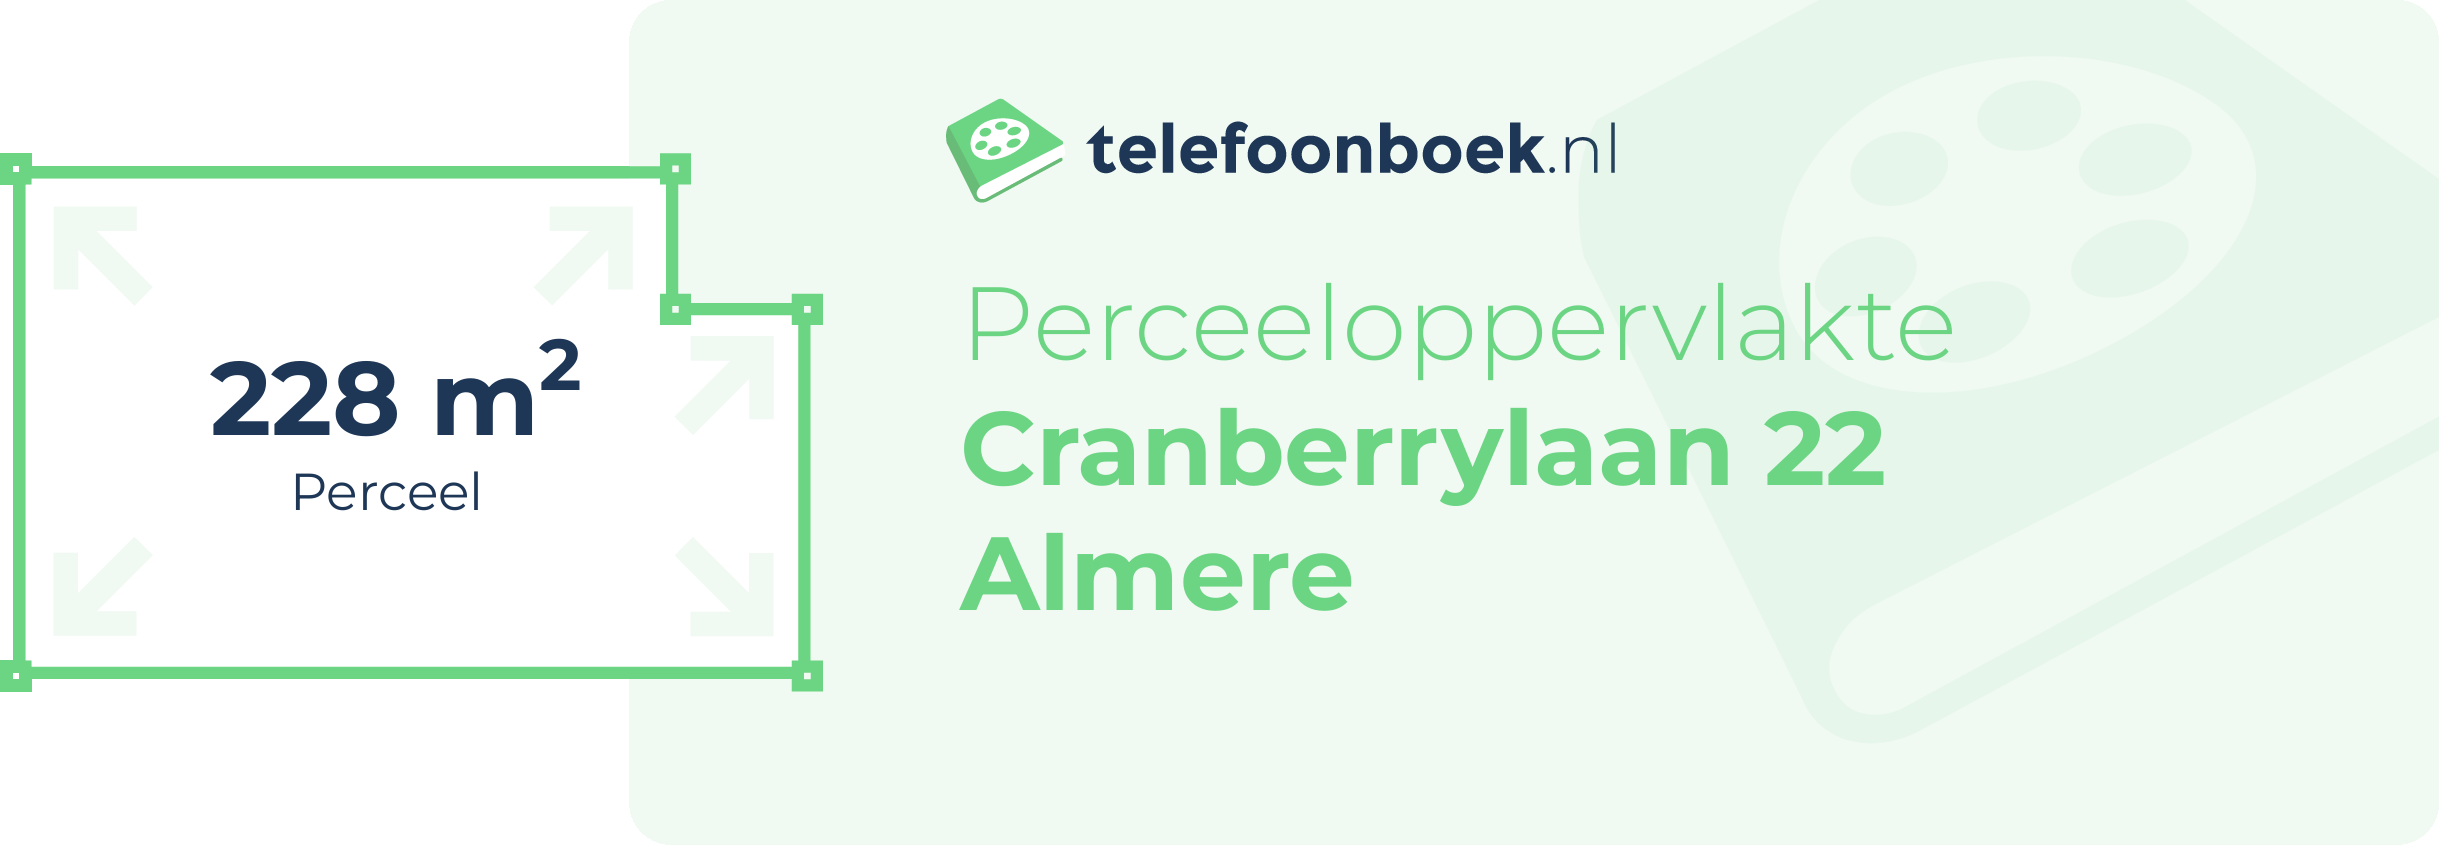 Perceeloppervlakte Cranberrylaan 22 Almere